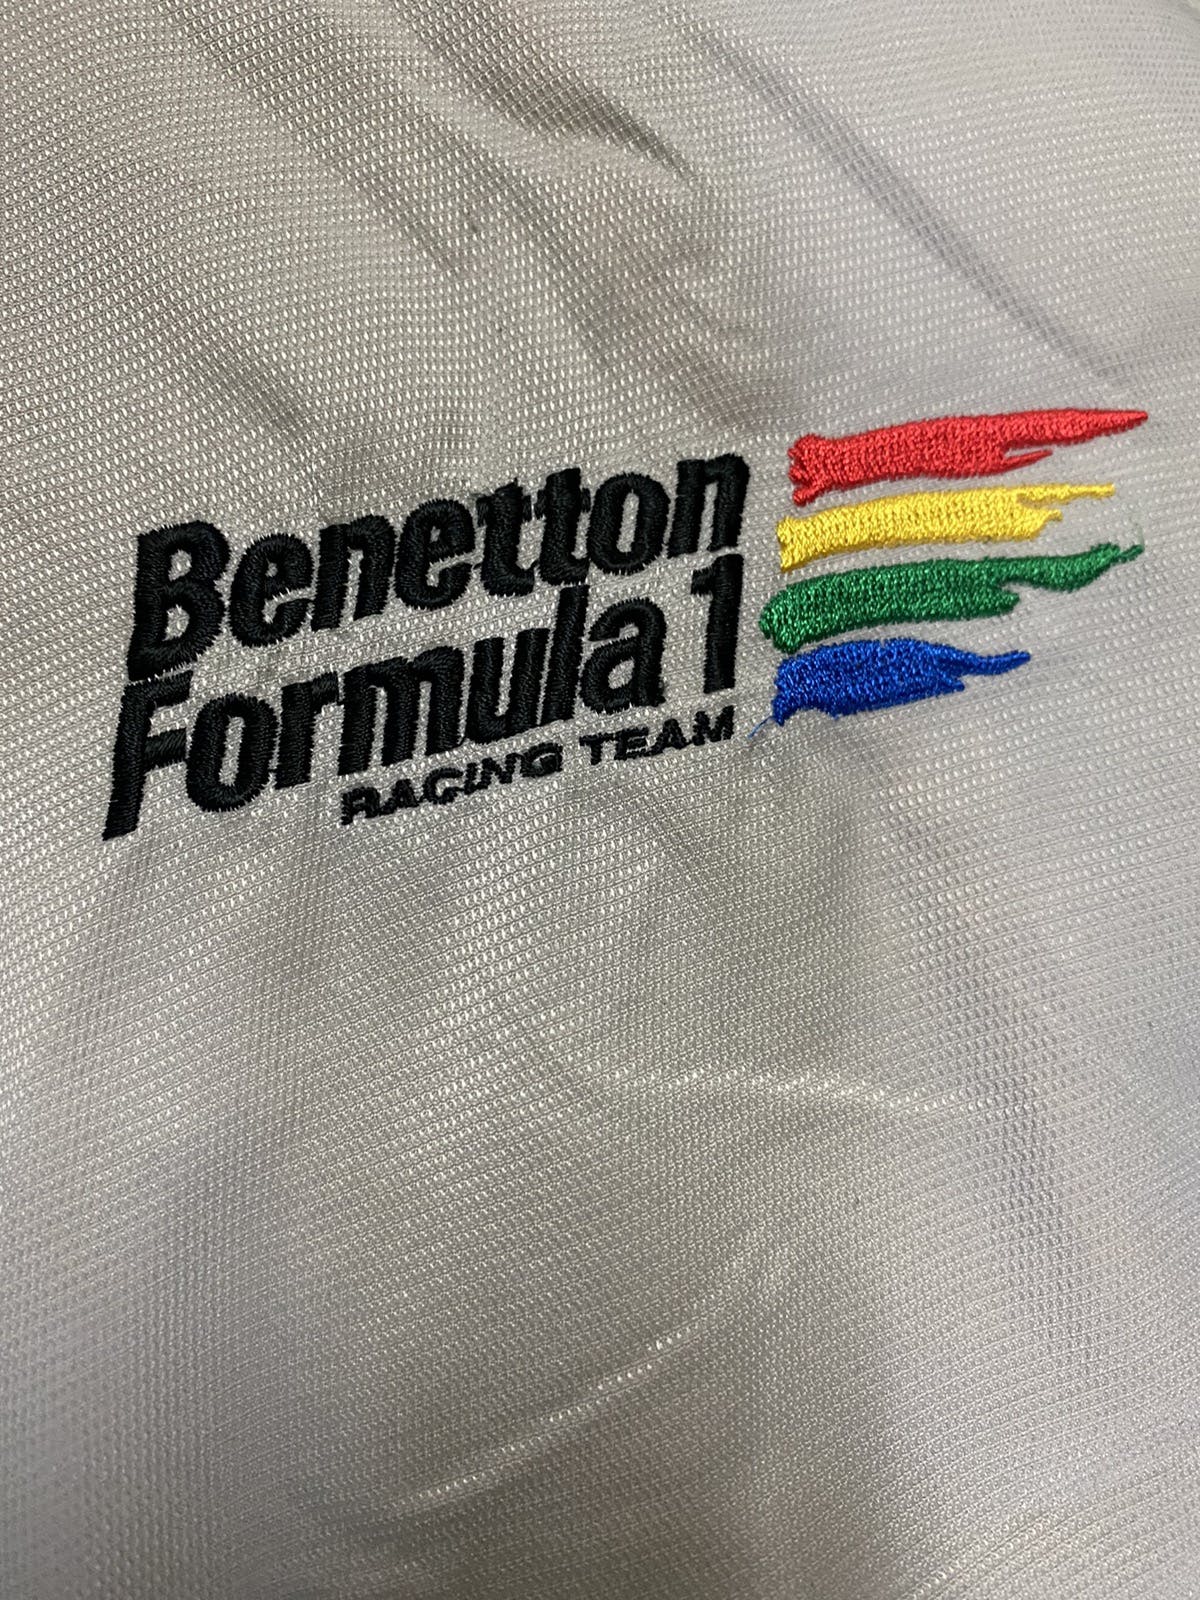 Sports Specialties - Benetton Formula 1 Racing team - 10